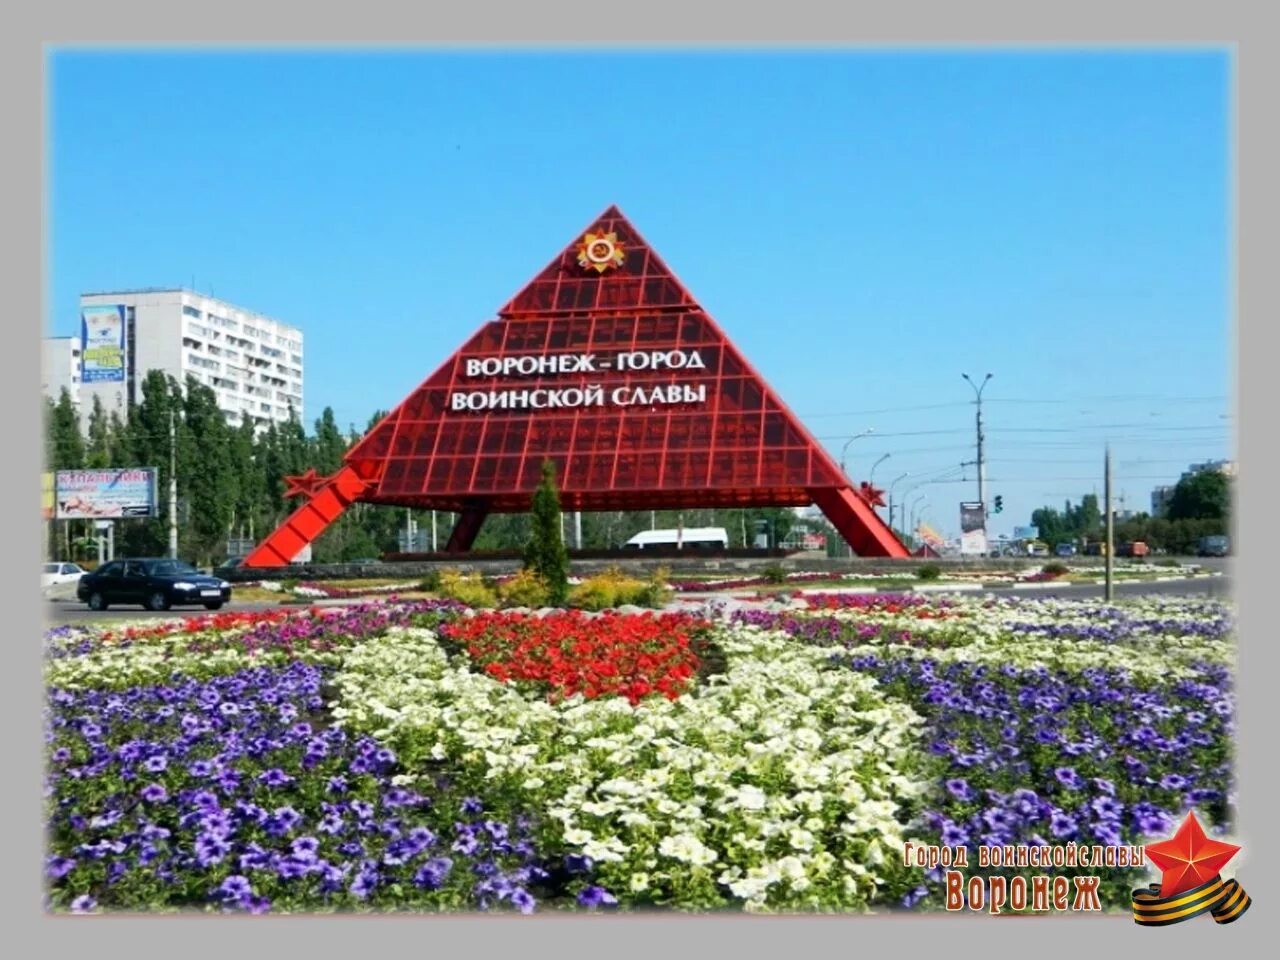 Monument of glory voronezh #19